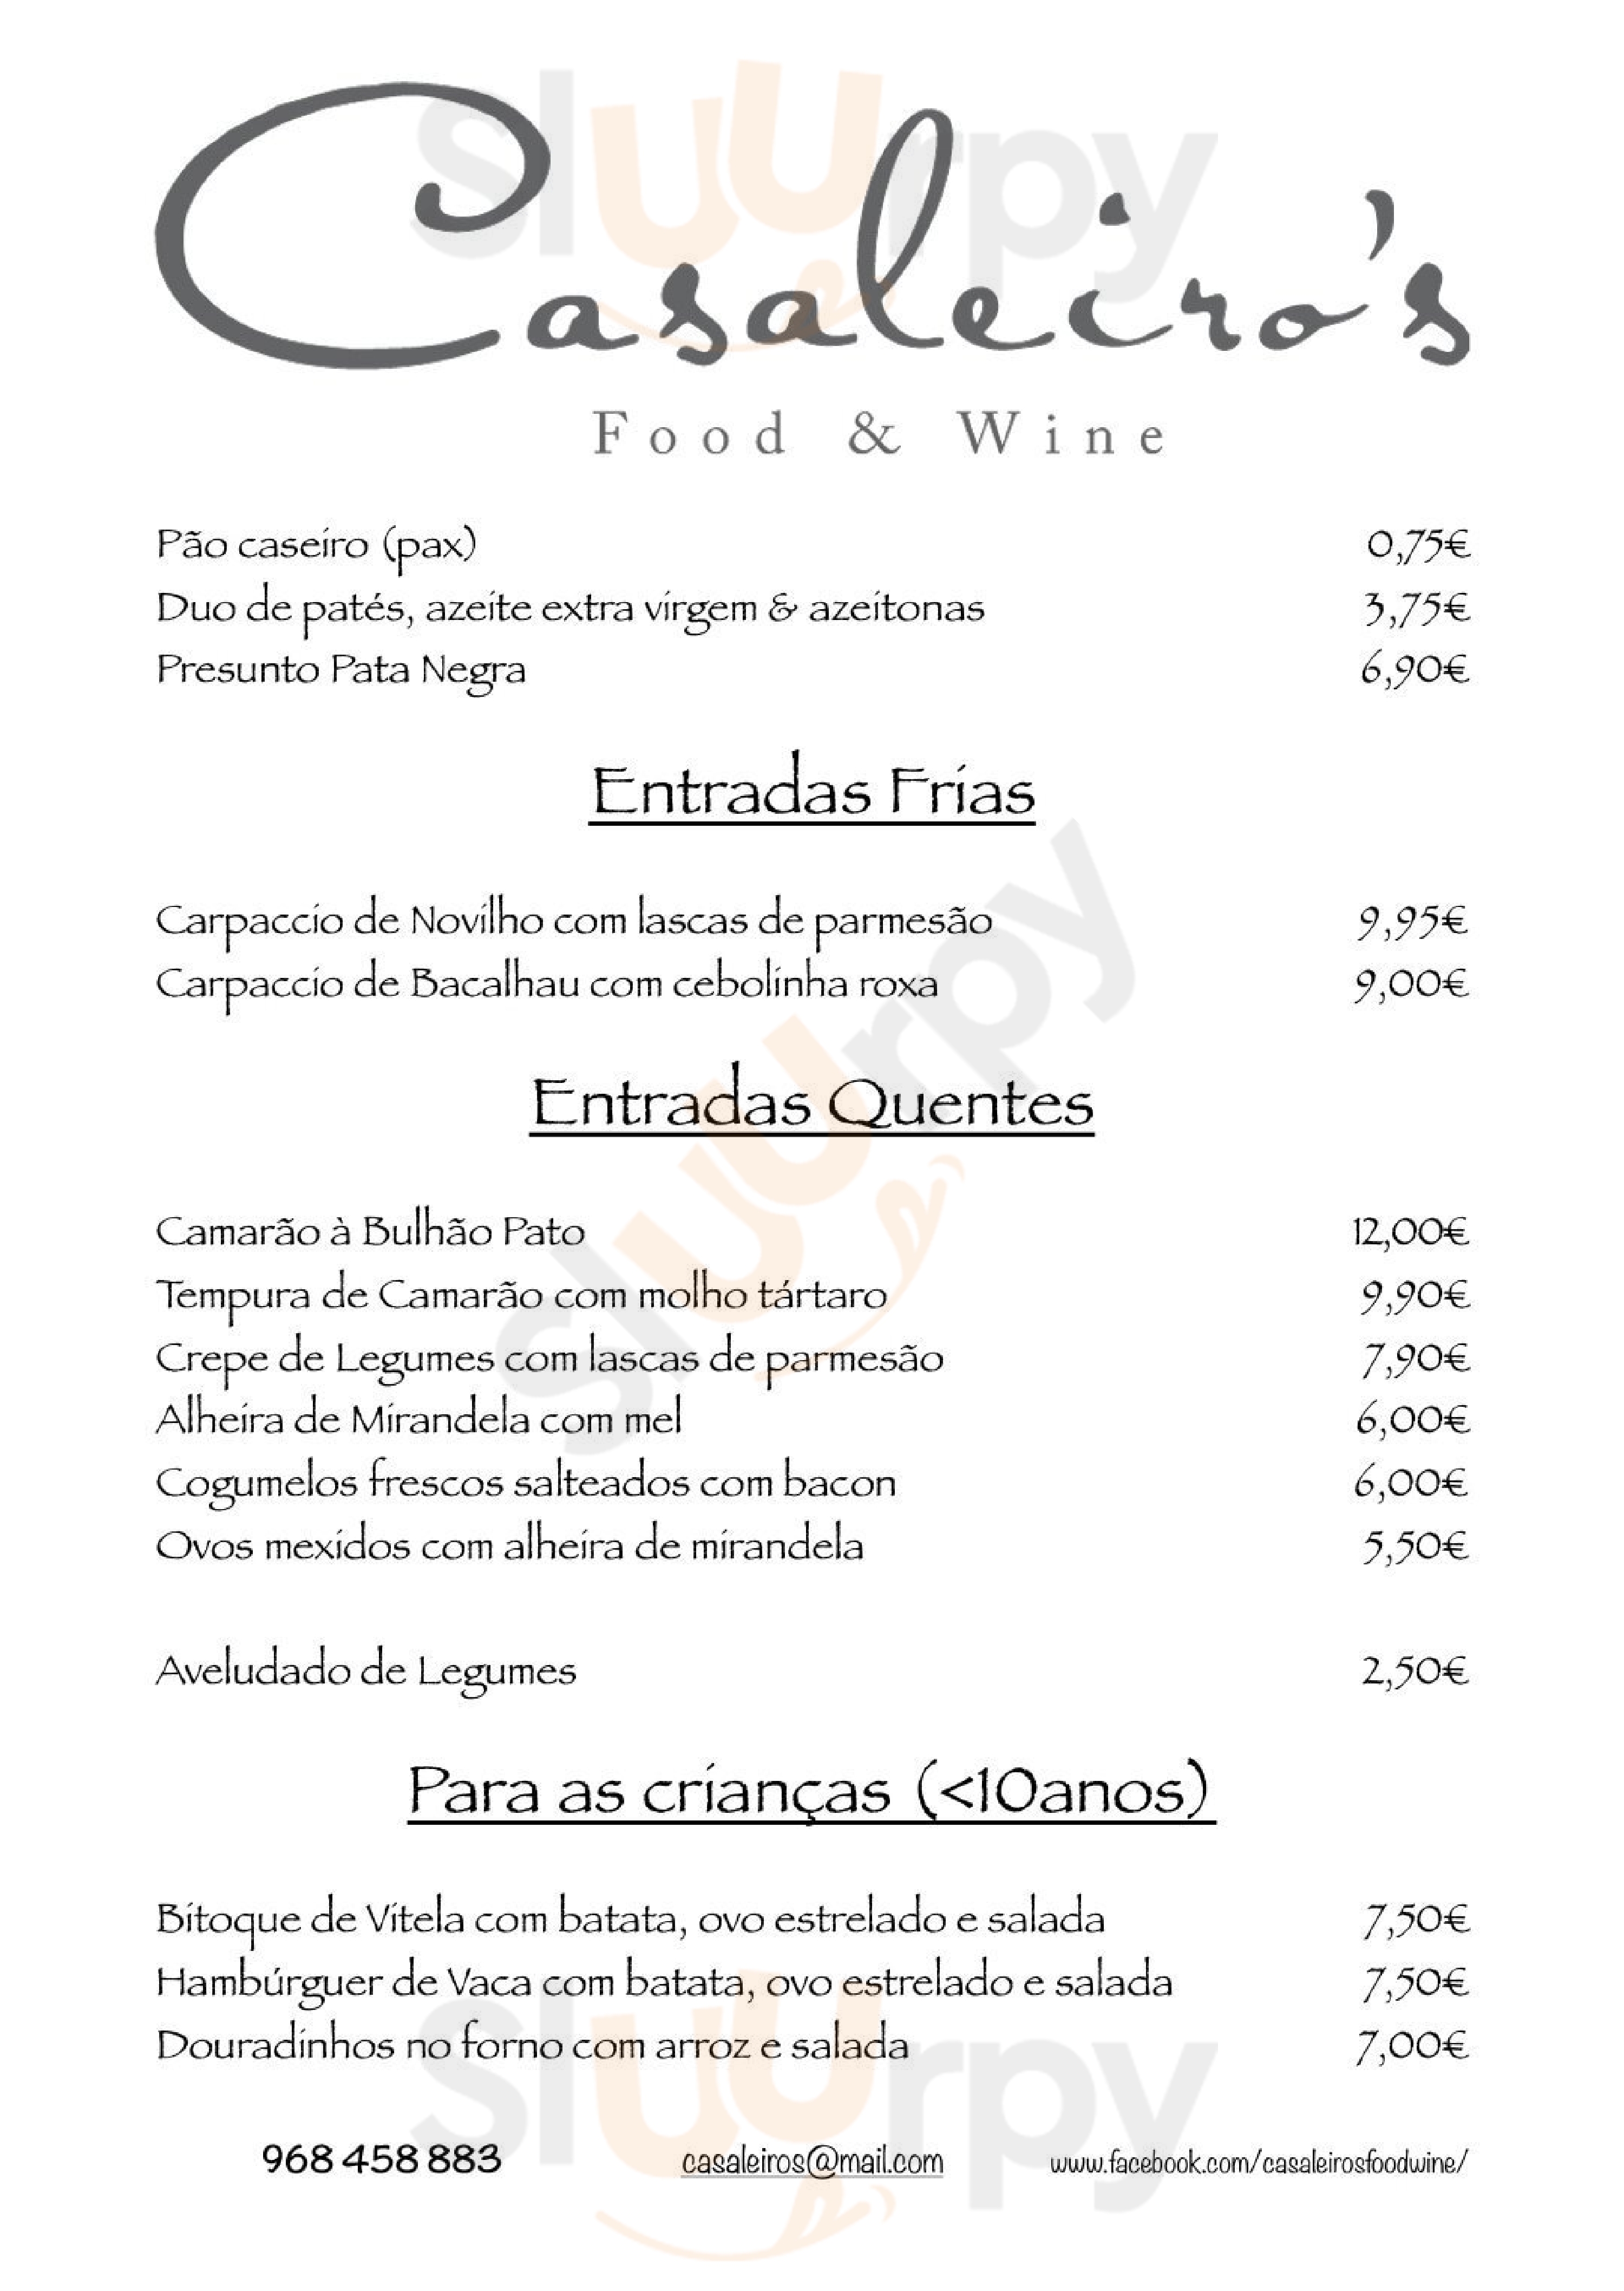 Casaleiro's Food & Wine Restaurant Alverca do Ribatejo Menu - 1